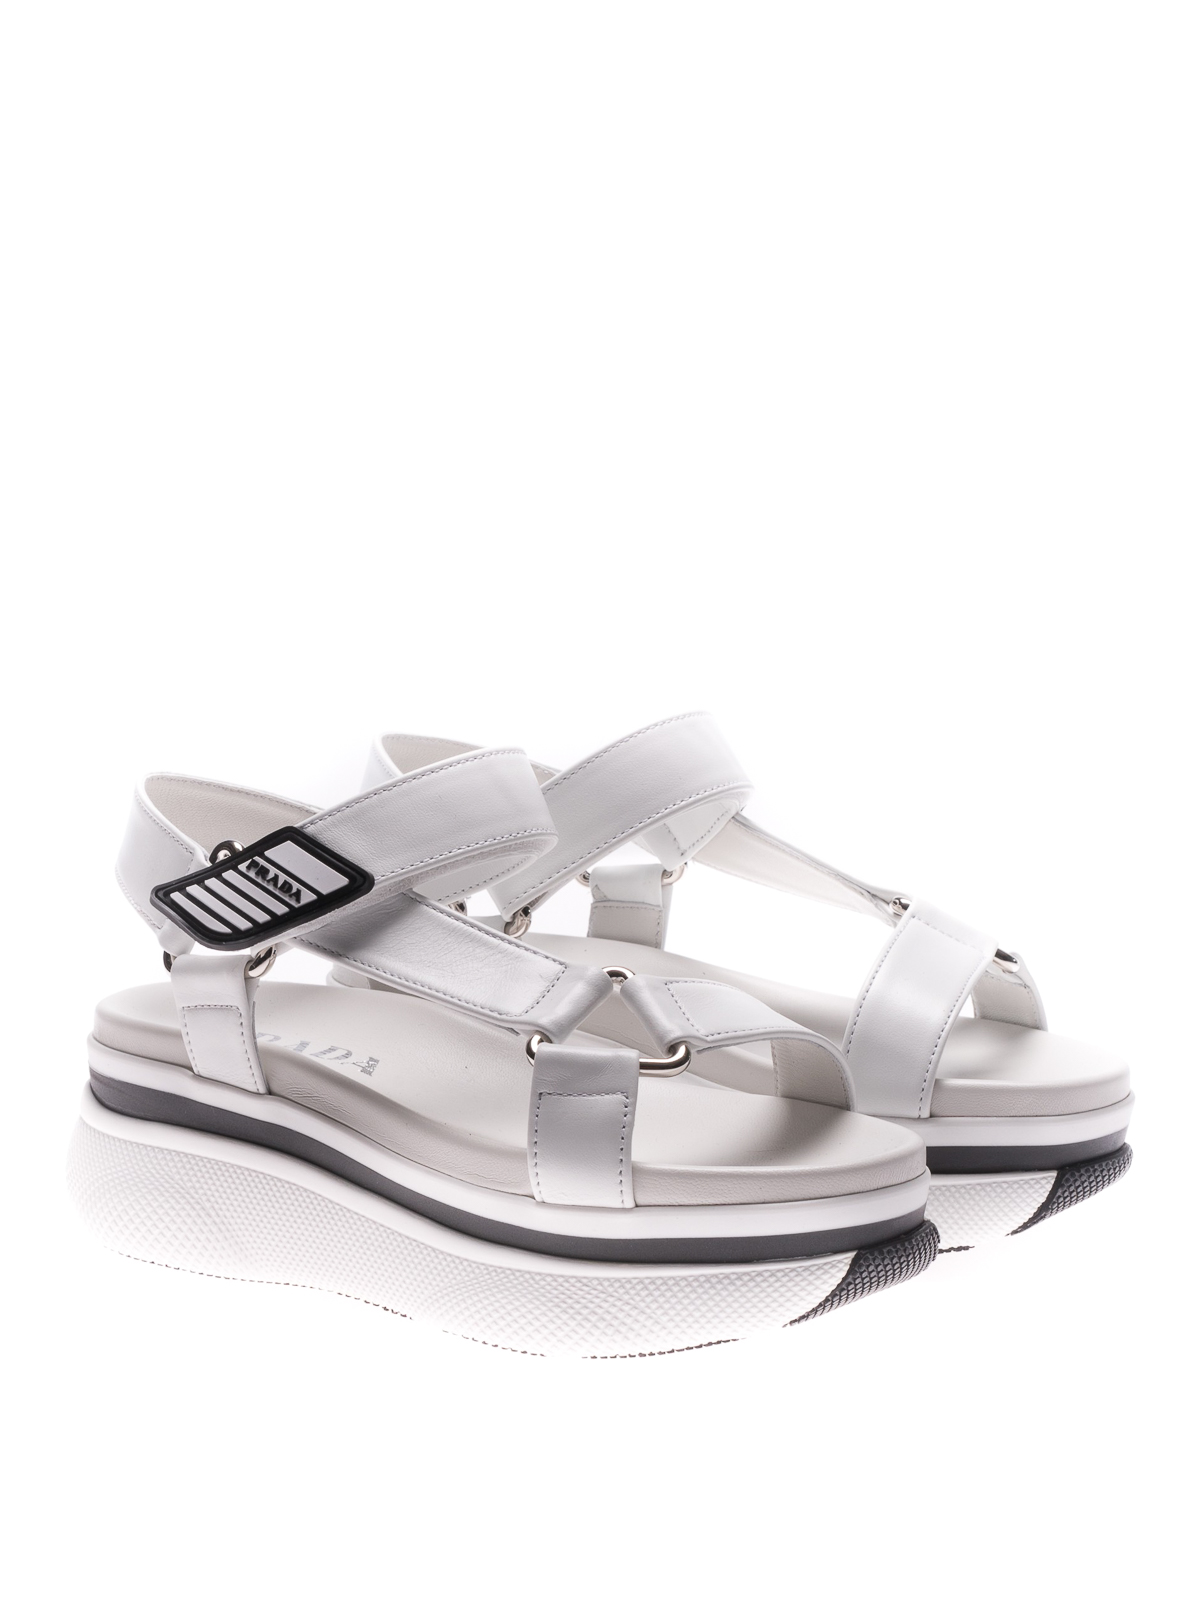 Prada - White leather strap sandals 